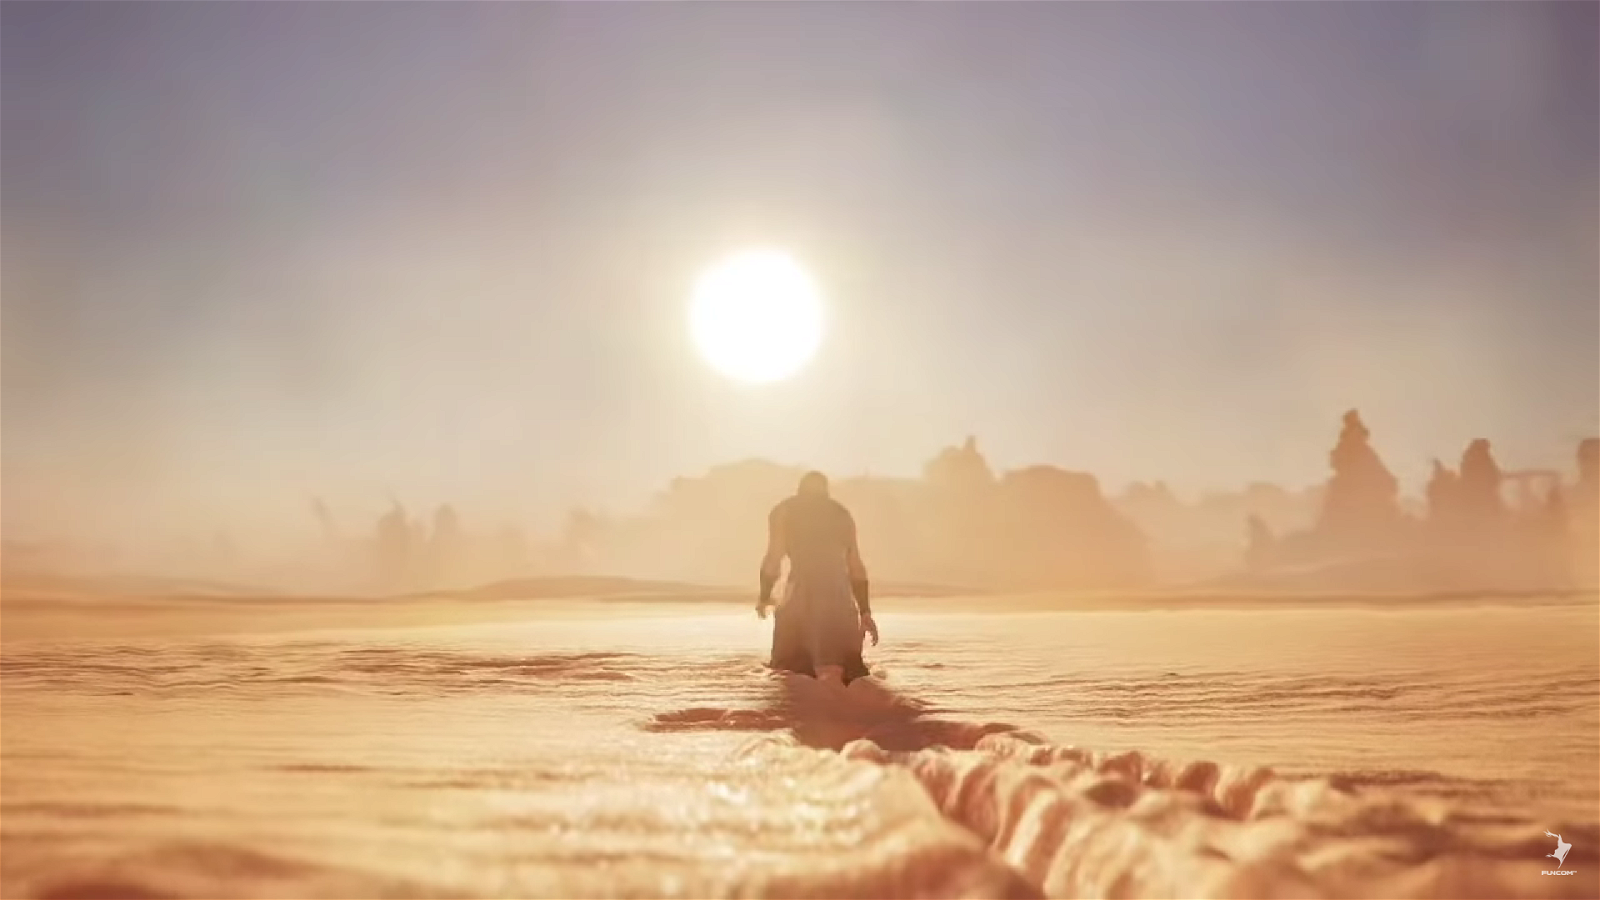 A still of Dune: Awakening from the official trailer